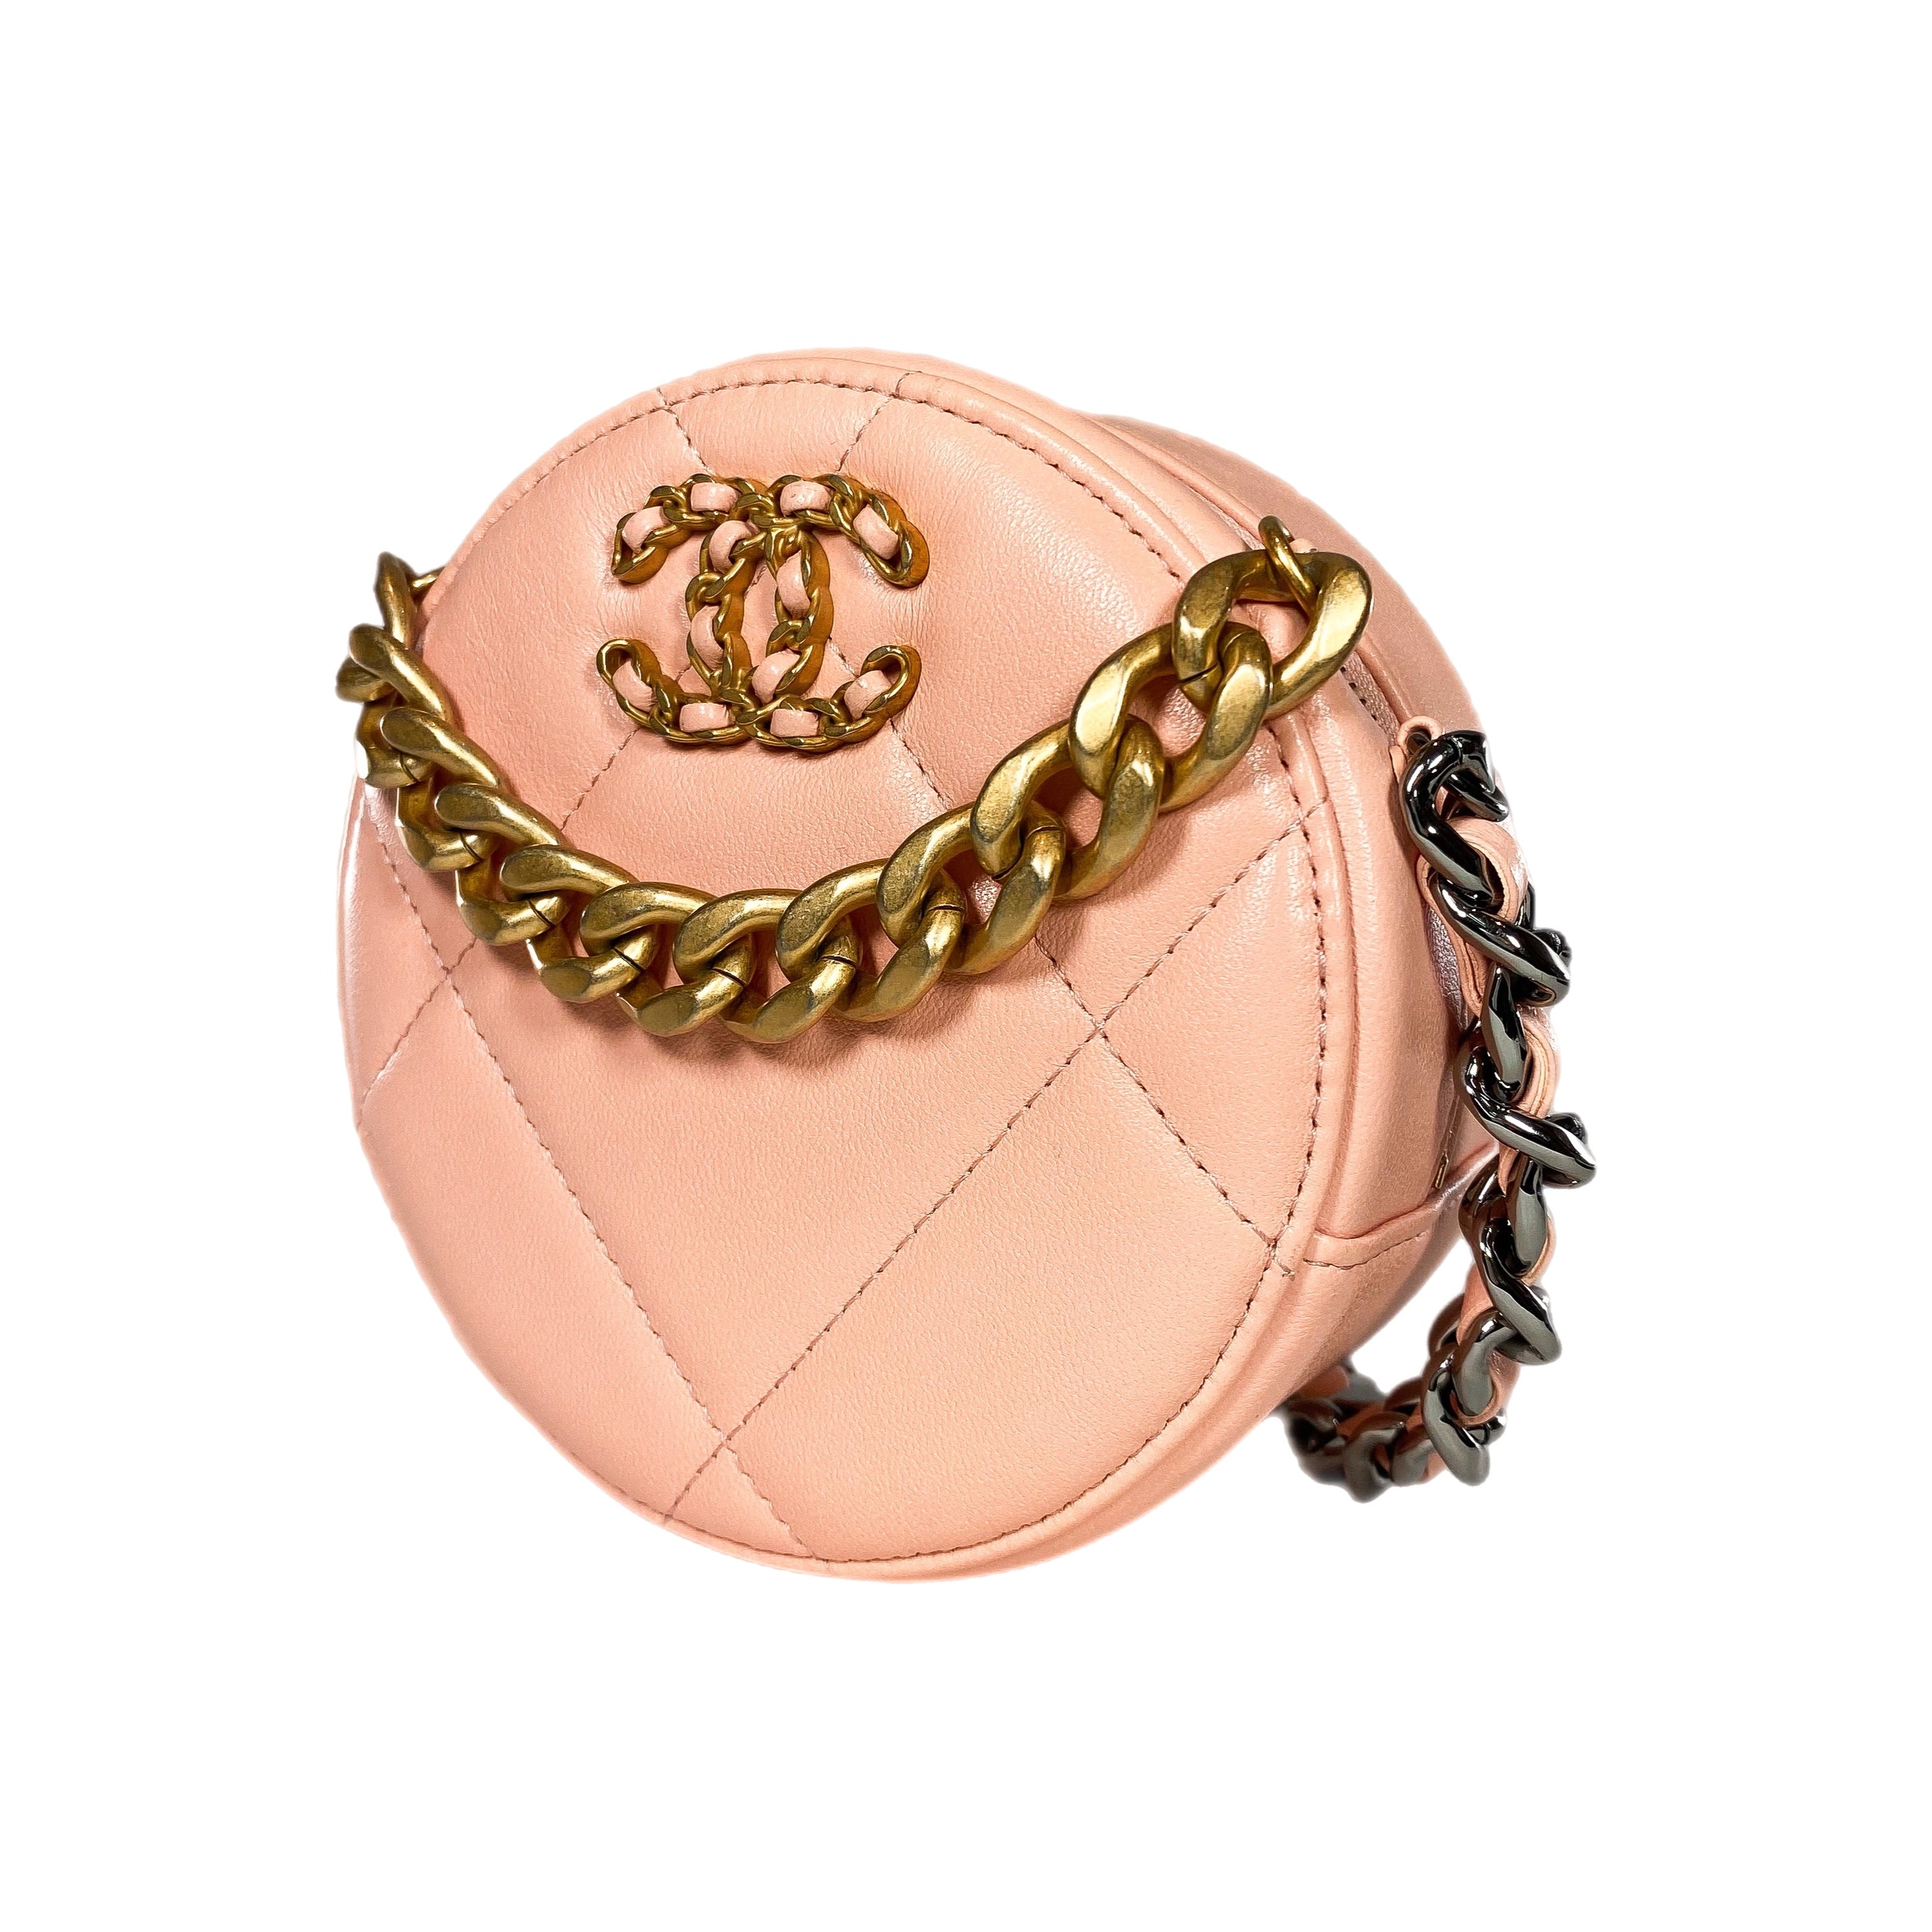 Chanel 19 Peach Round Clutch with Chain